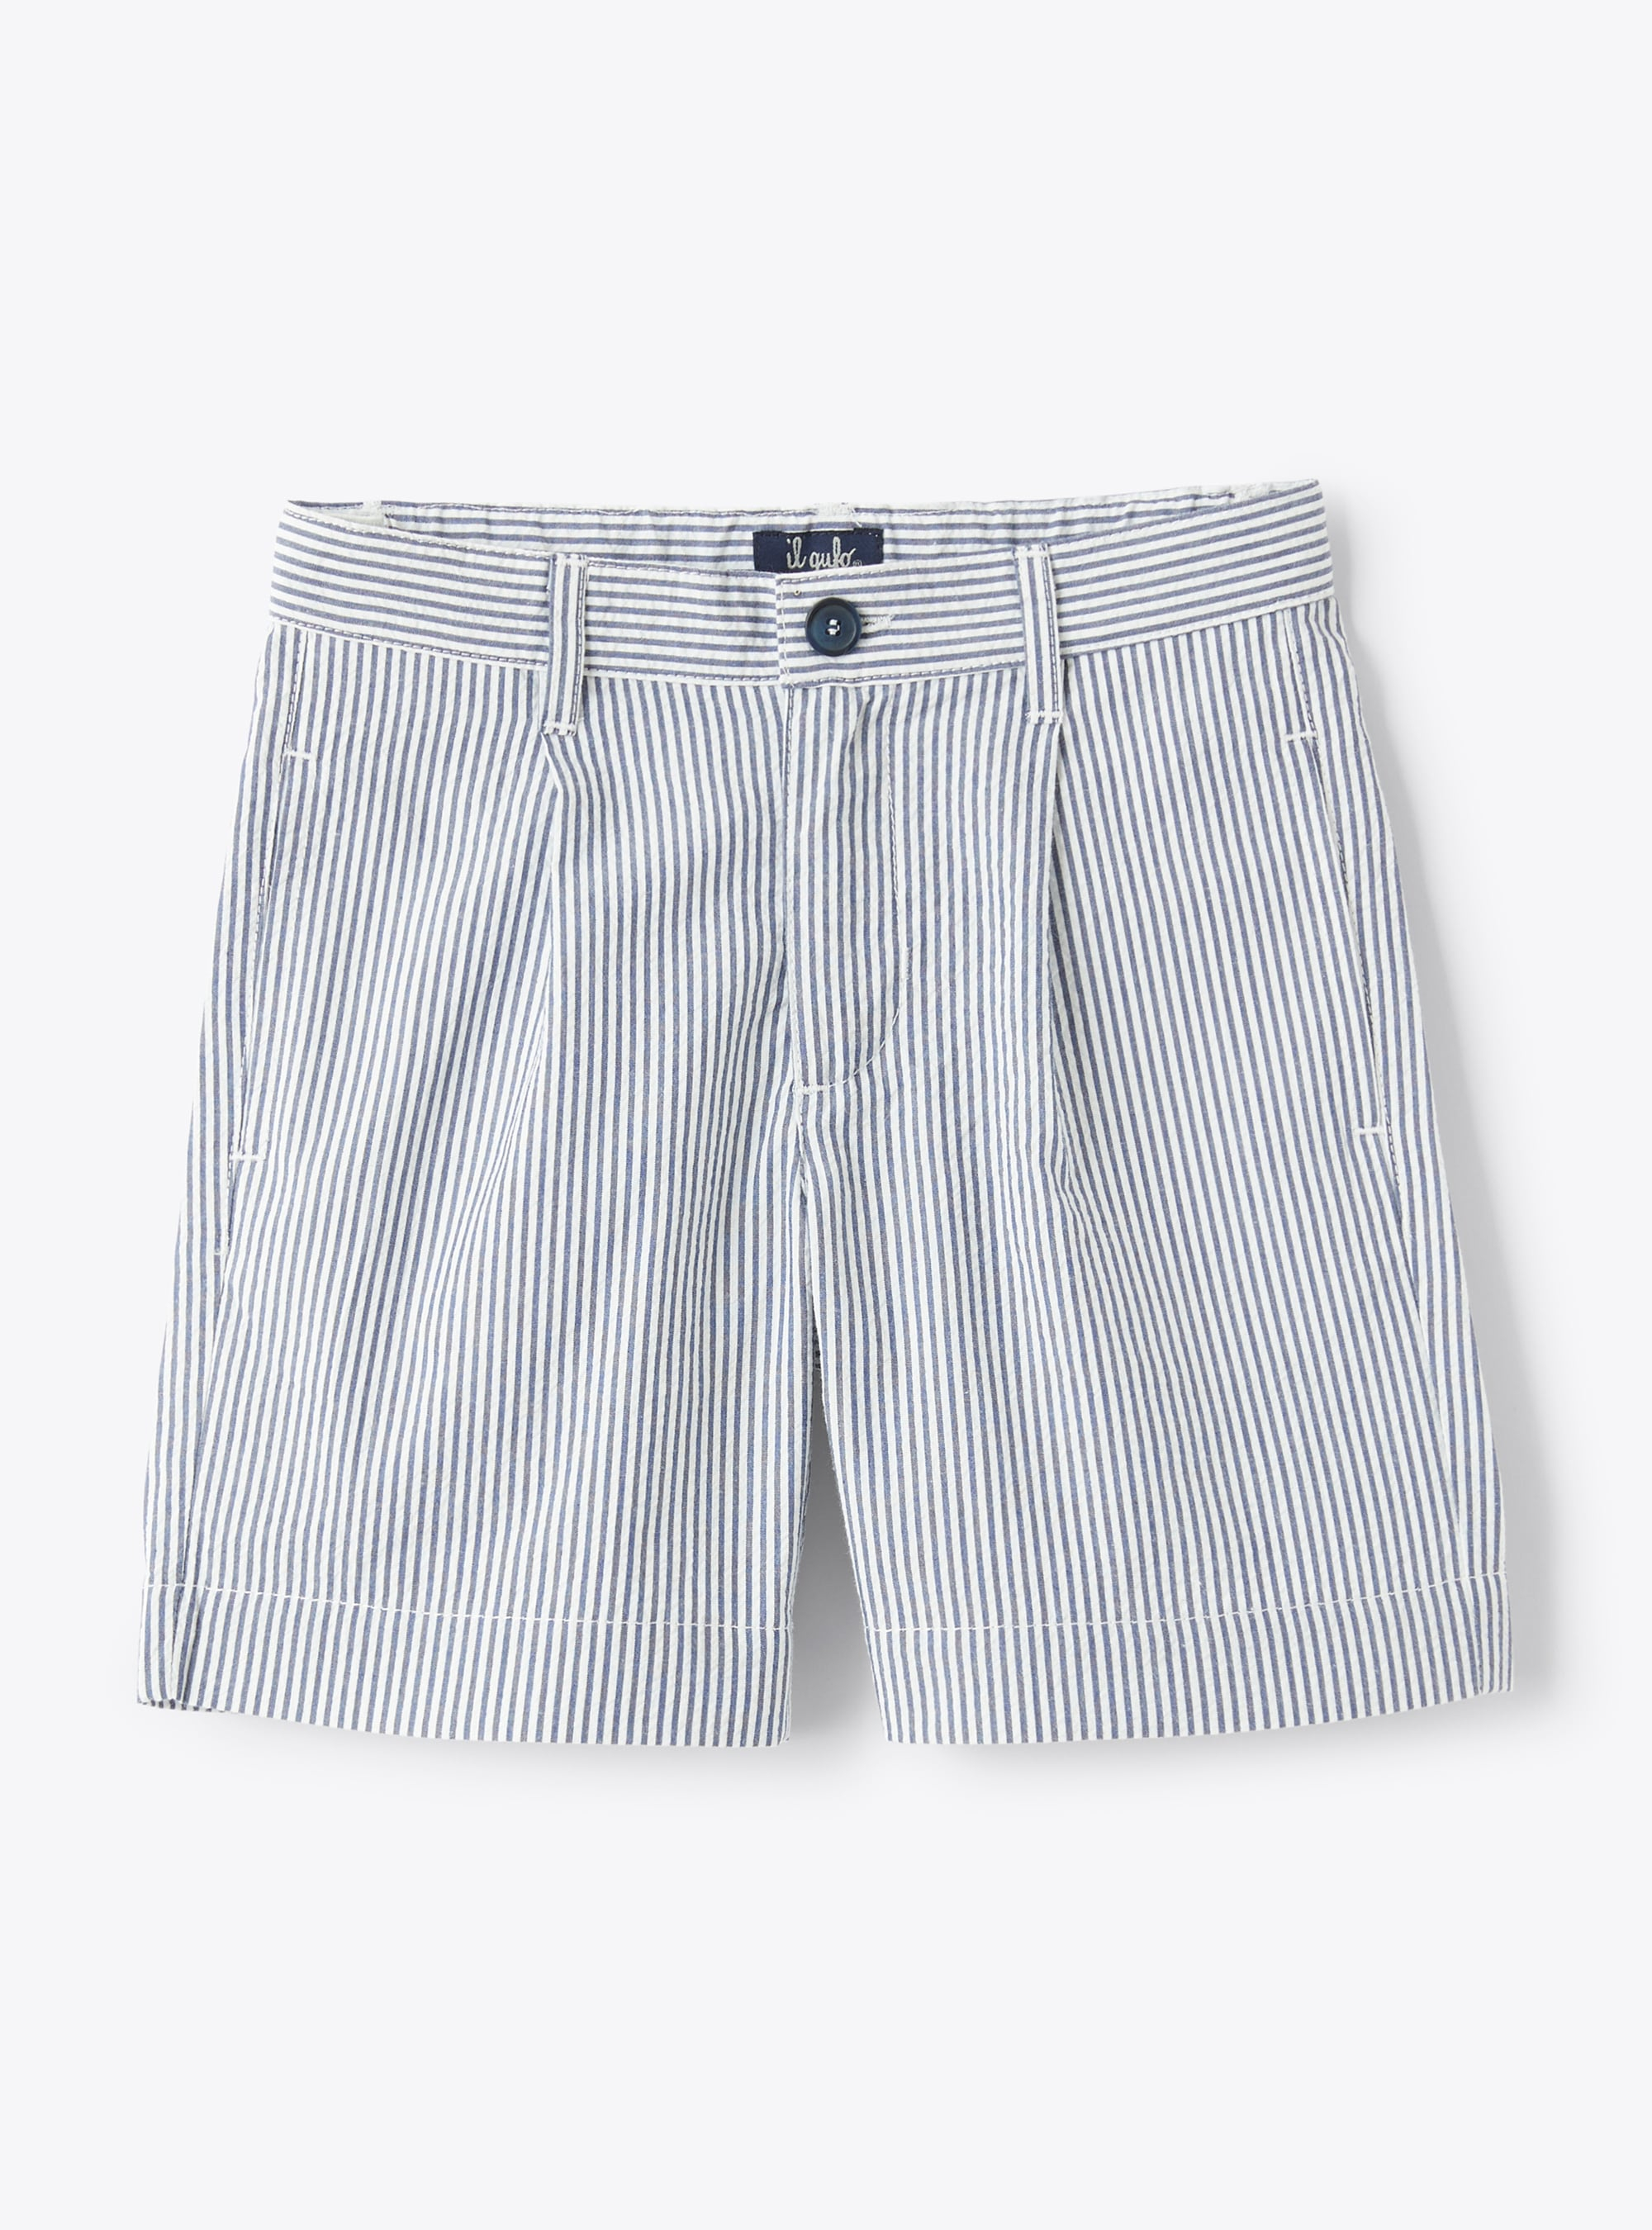 Bermuda shorts in blue-&-white striped seersucker - Trousers - Il Gufo